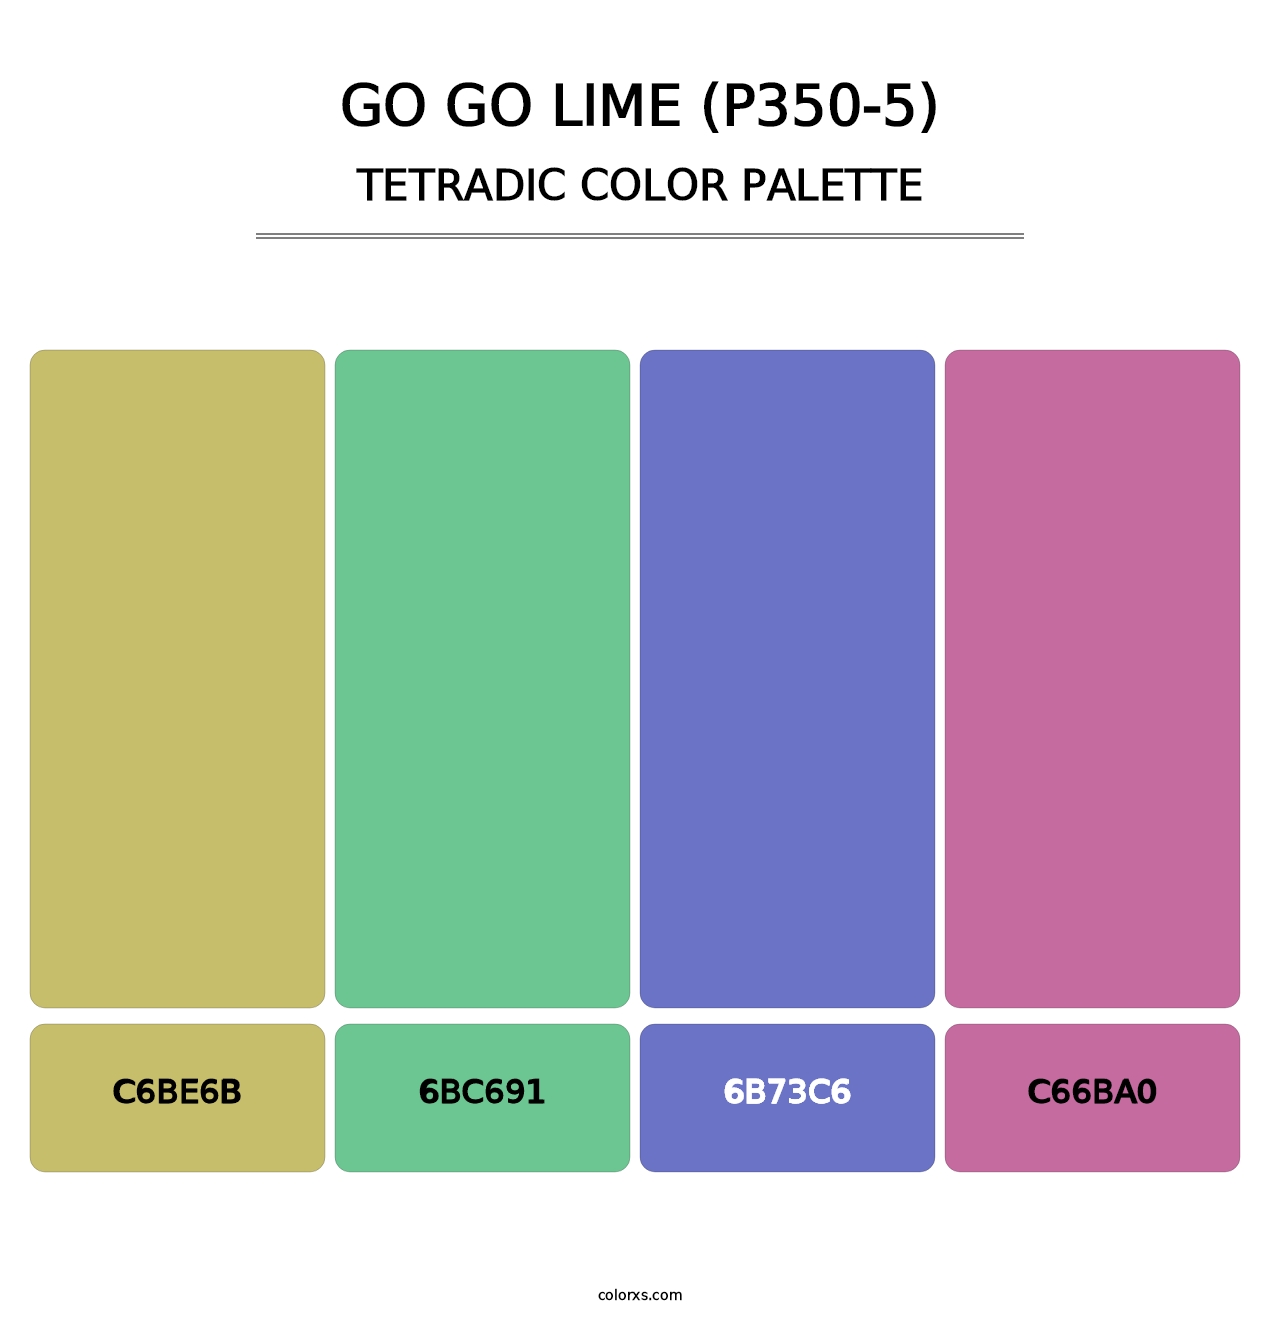 Go Go Lime (P350-5) - Tetradic Color Palette